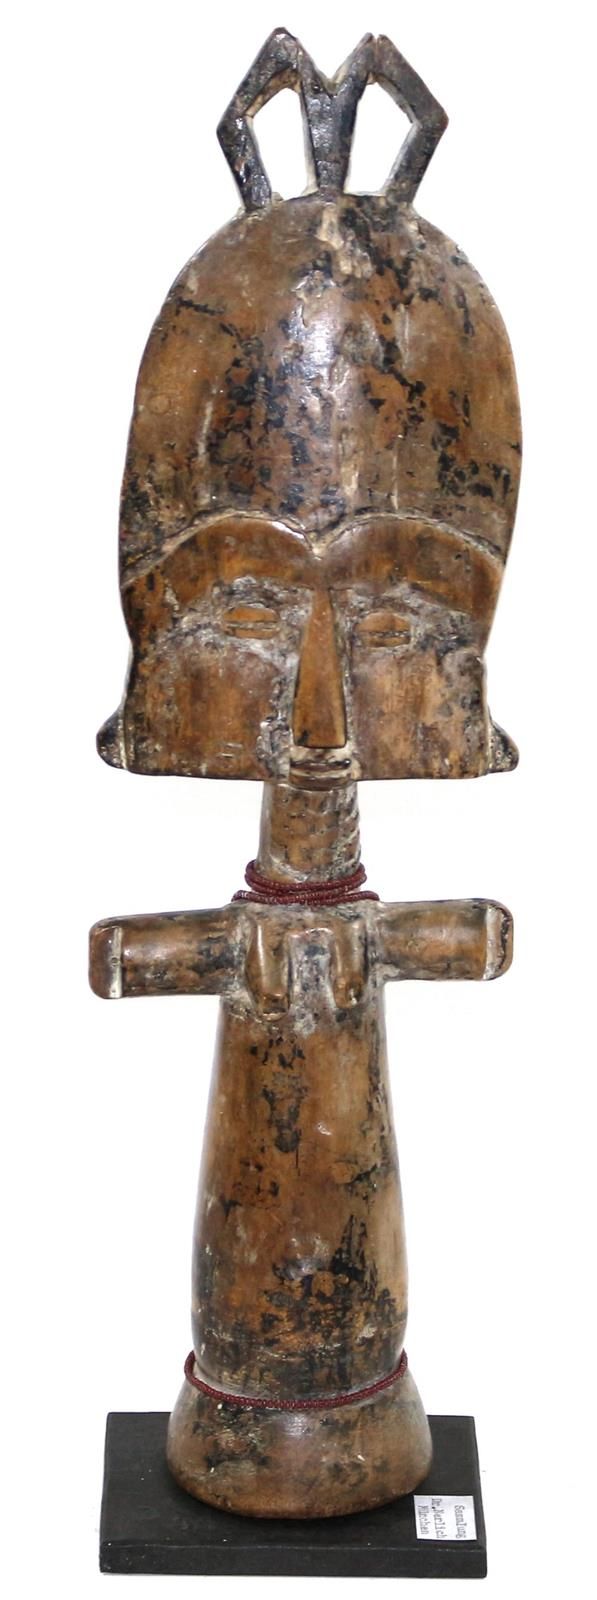 Akuaba Puppe Ashanti 加纳。深色木头，有浅色铜锈。扁平、半椭圆形的圆盘头，有环形冠饰。颈部和底部有珍珠装饰。安装在一个金属板上。侧面有收藏标&hellip;